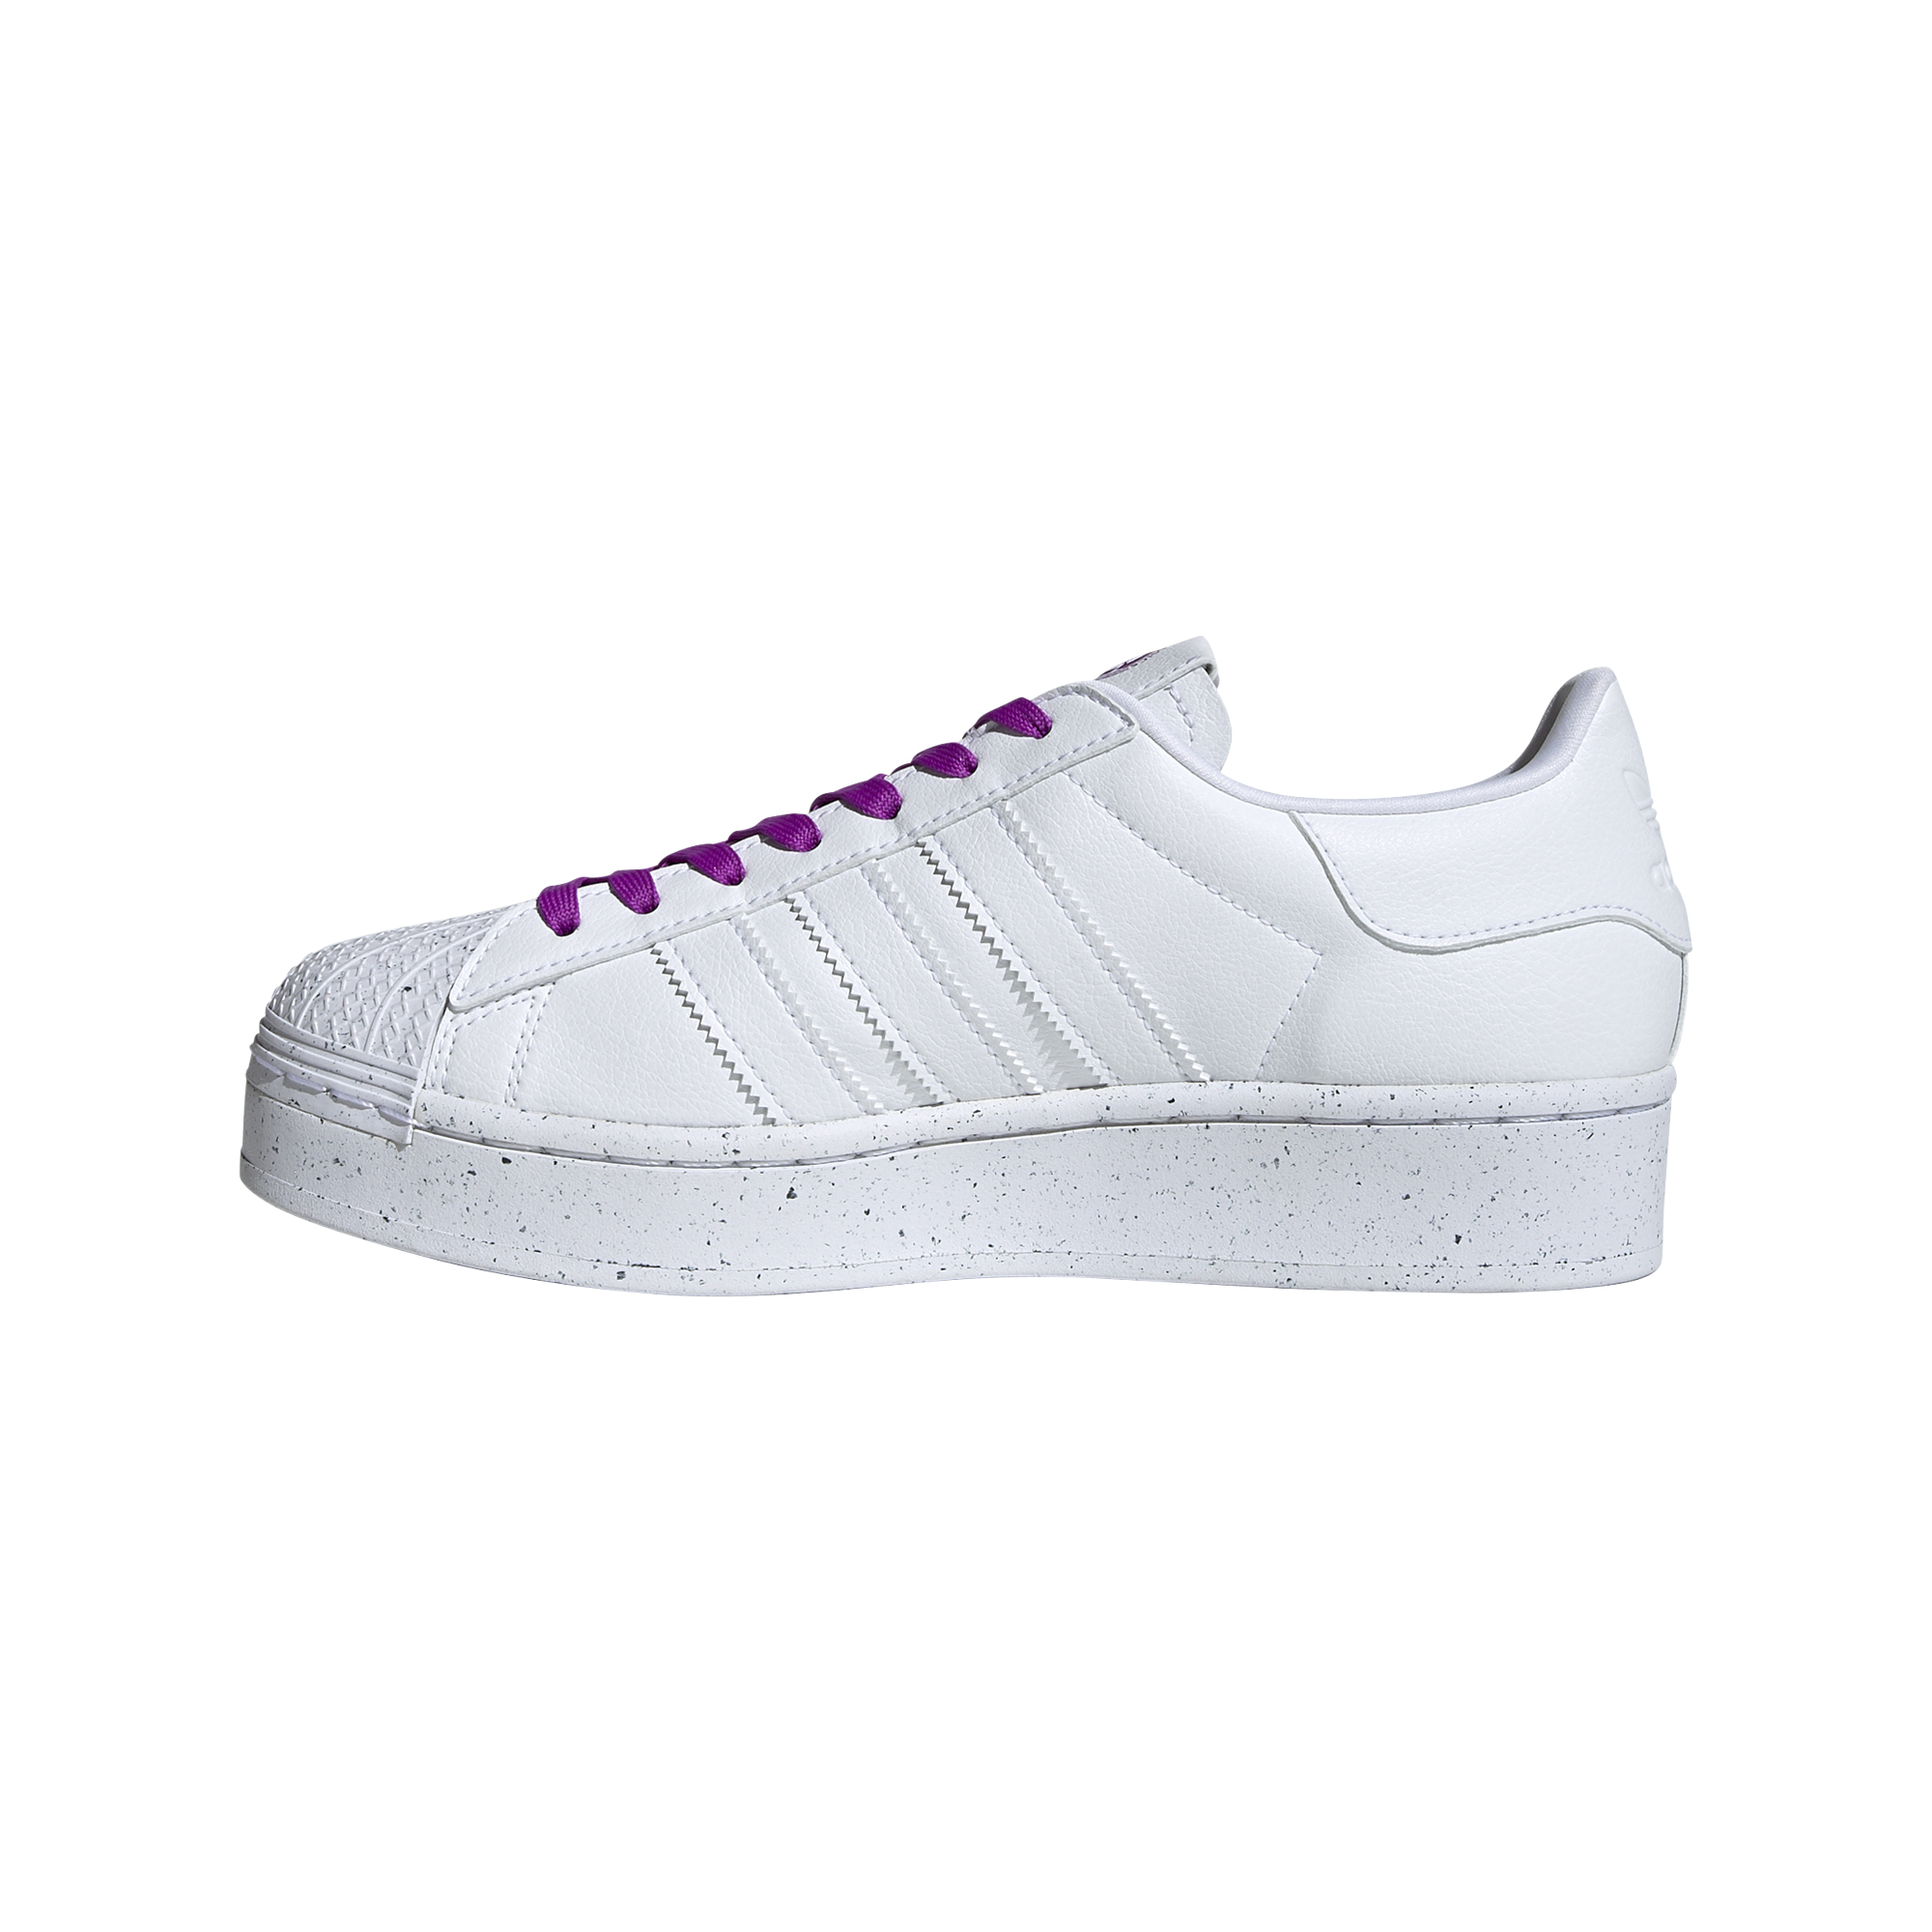 adidas Superstar Bold W Clean Classics Ftw White/ Ftw White/ Shock Purple 59500